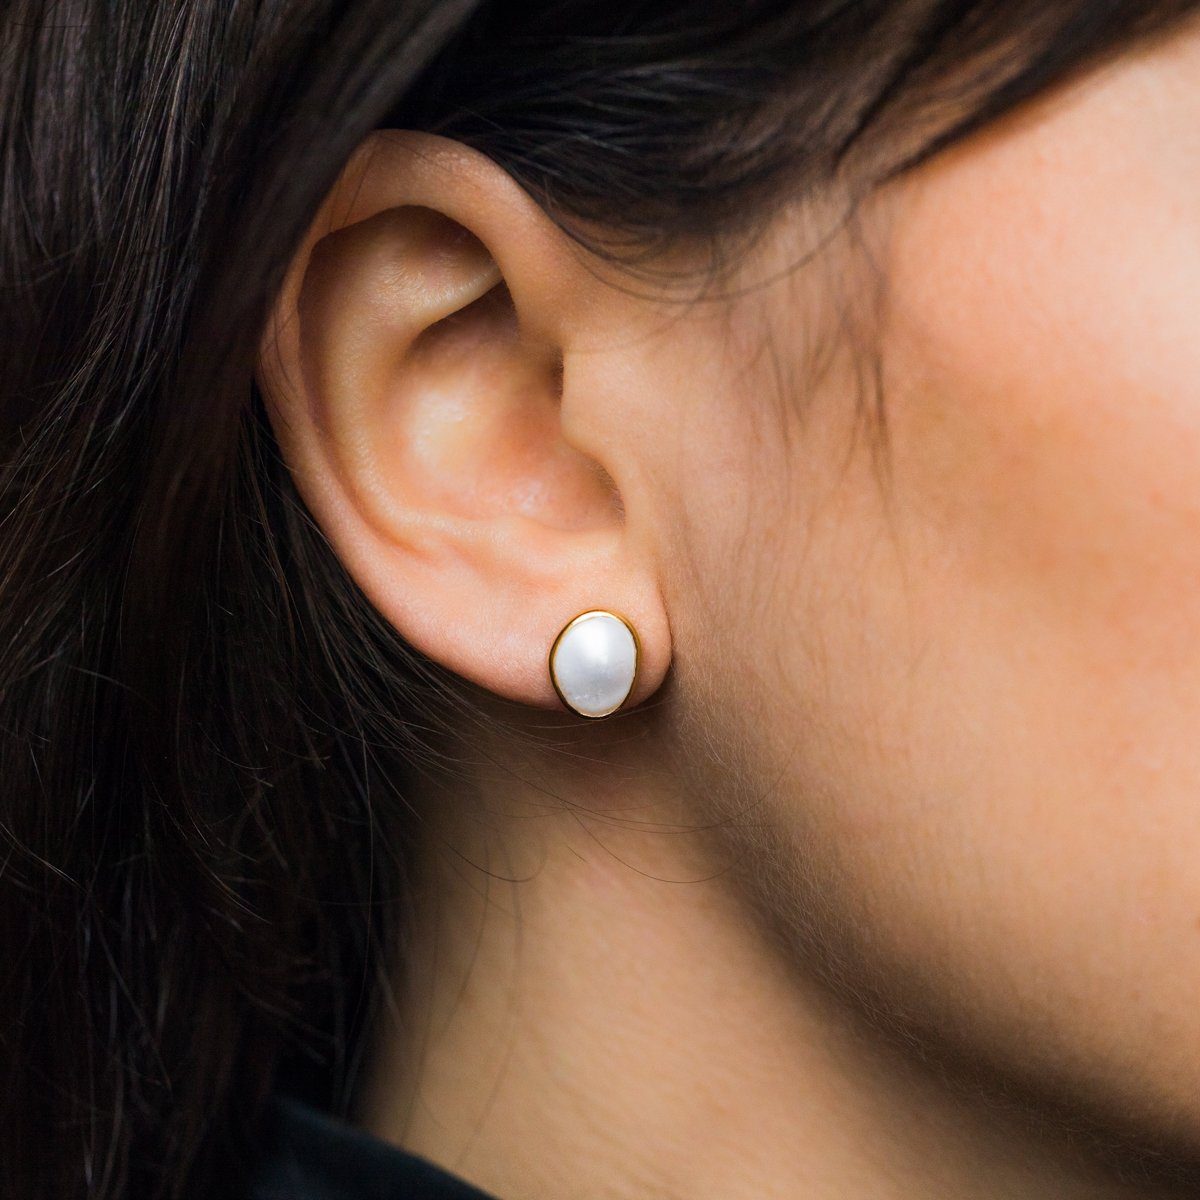 Pearl Simple Earrings - earrings - Carrie Elizabeth Jewelry local eclectic